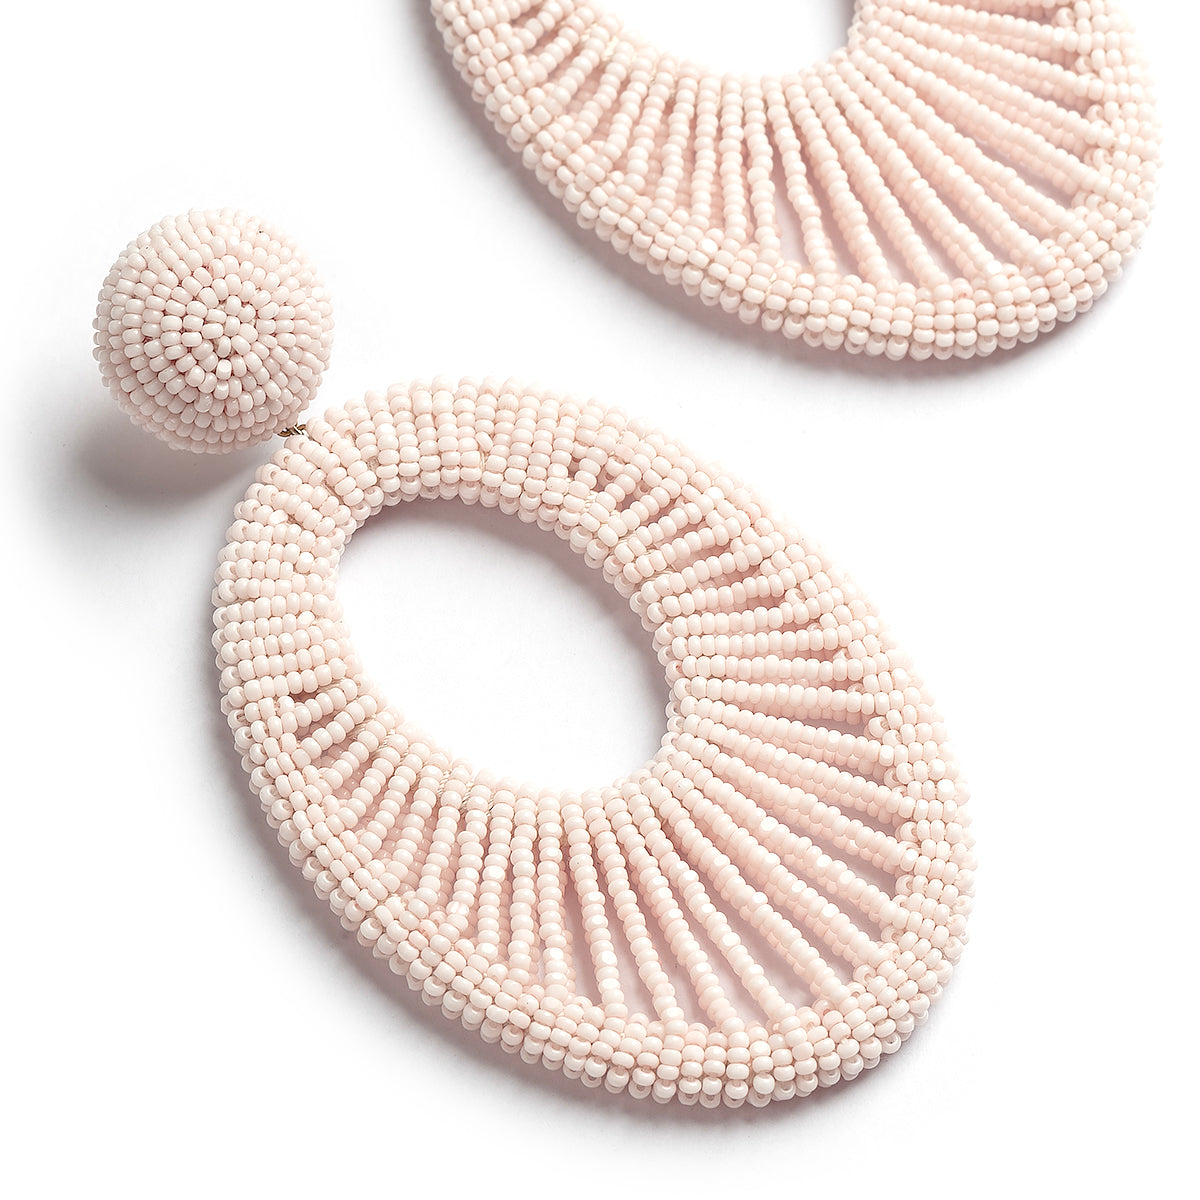 Deepa Gurnani handmade the Cypress earrings in baby pink color